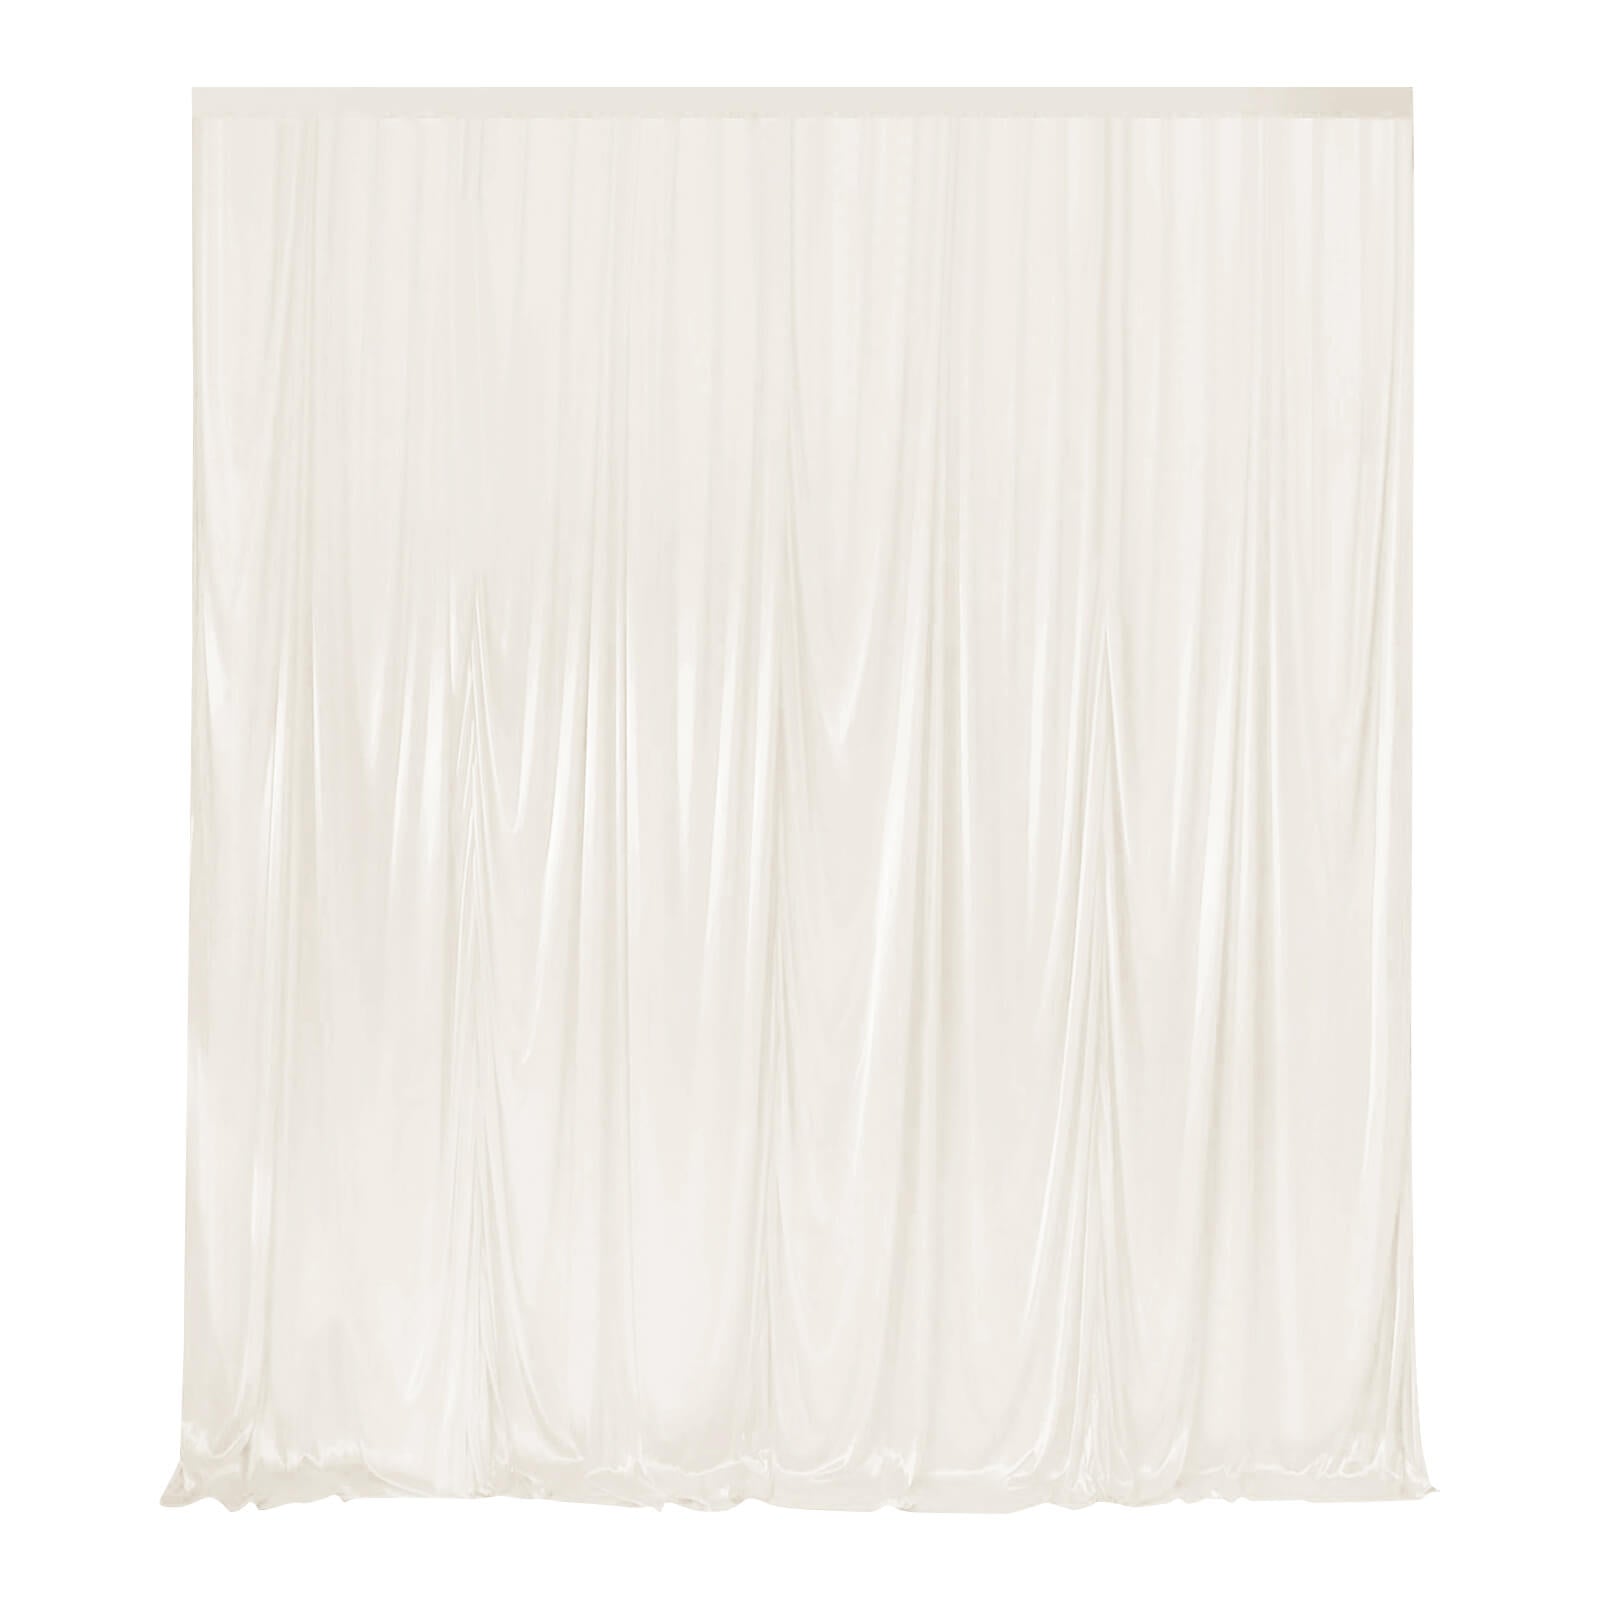 Backdrop Curtains - BCBMALL